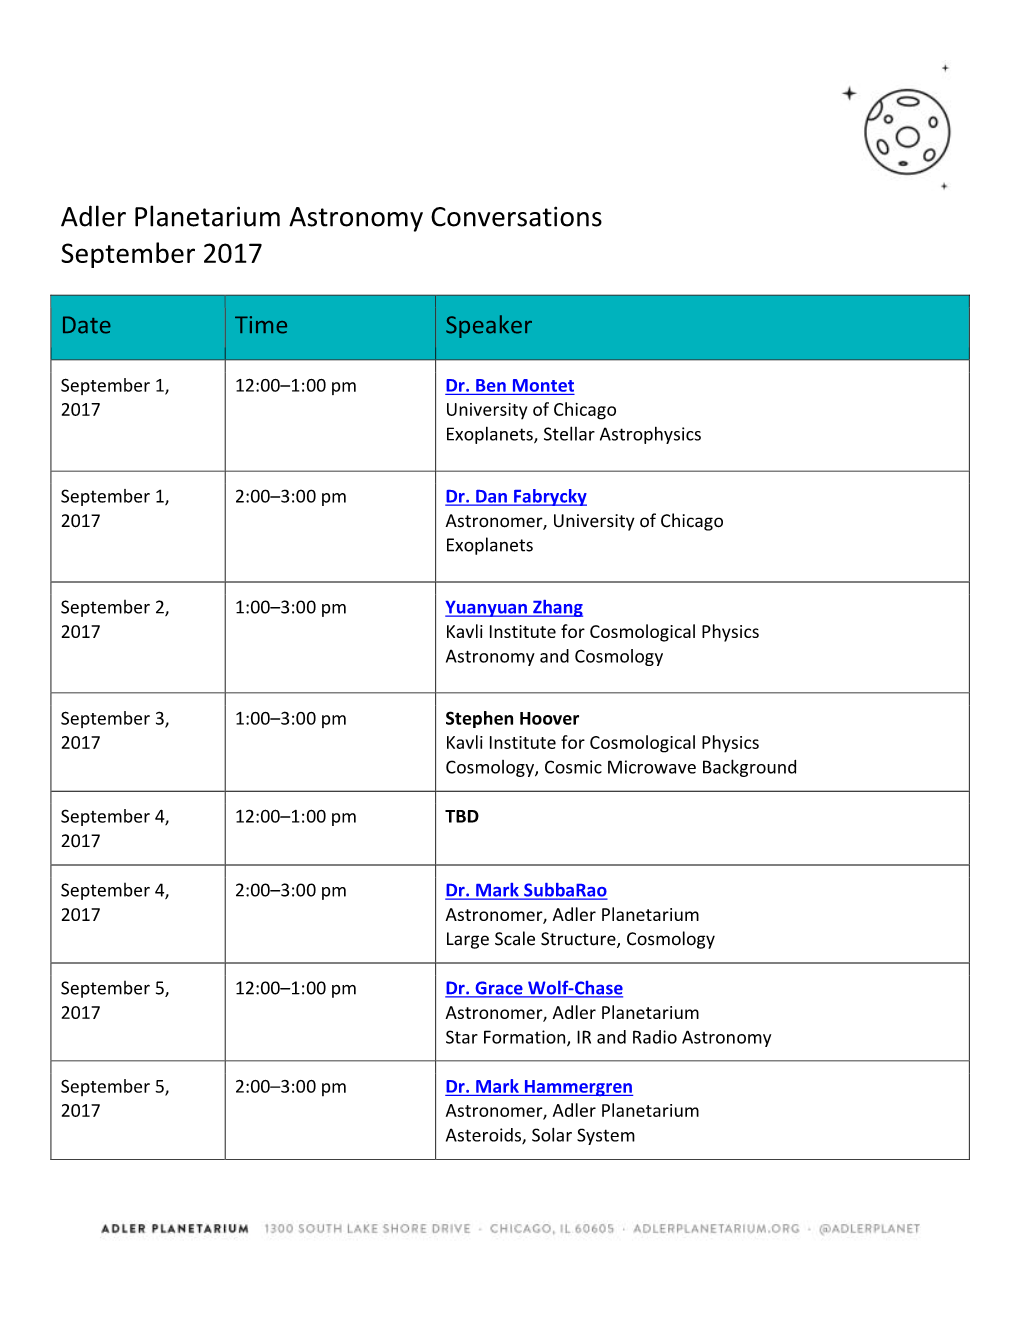 Adler Planetarium Astronomy Conversations September 2017